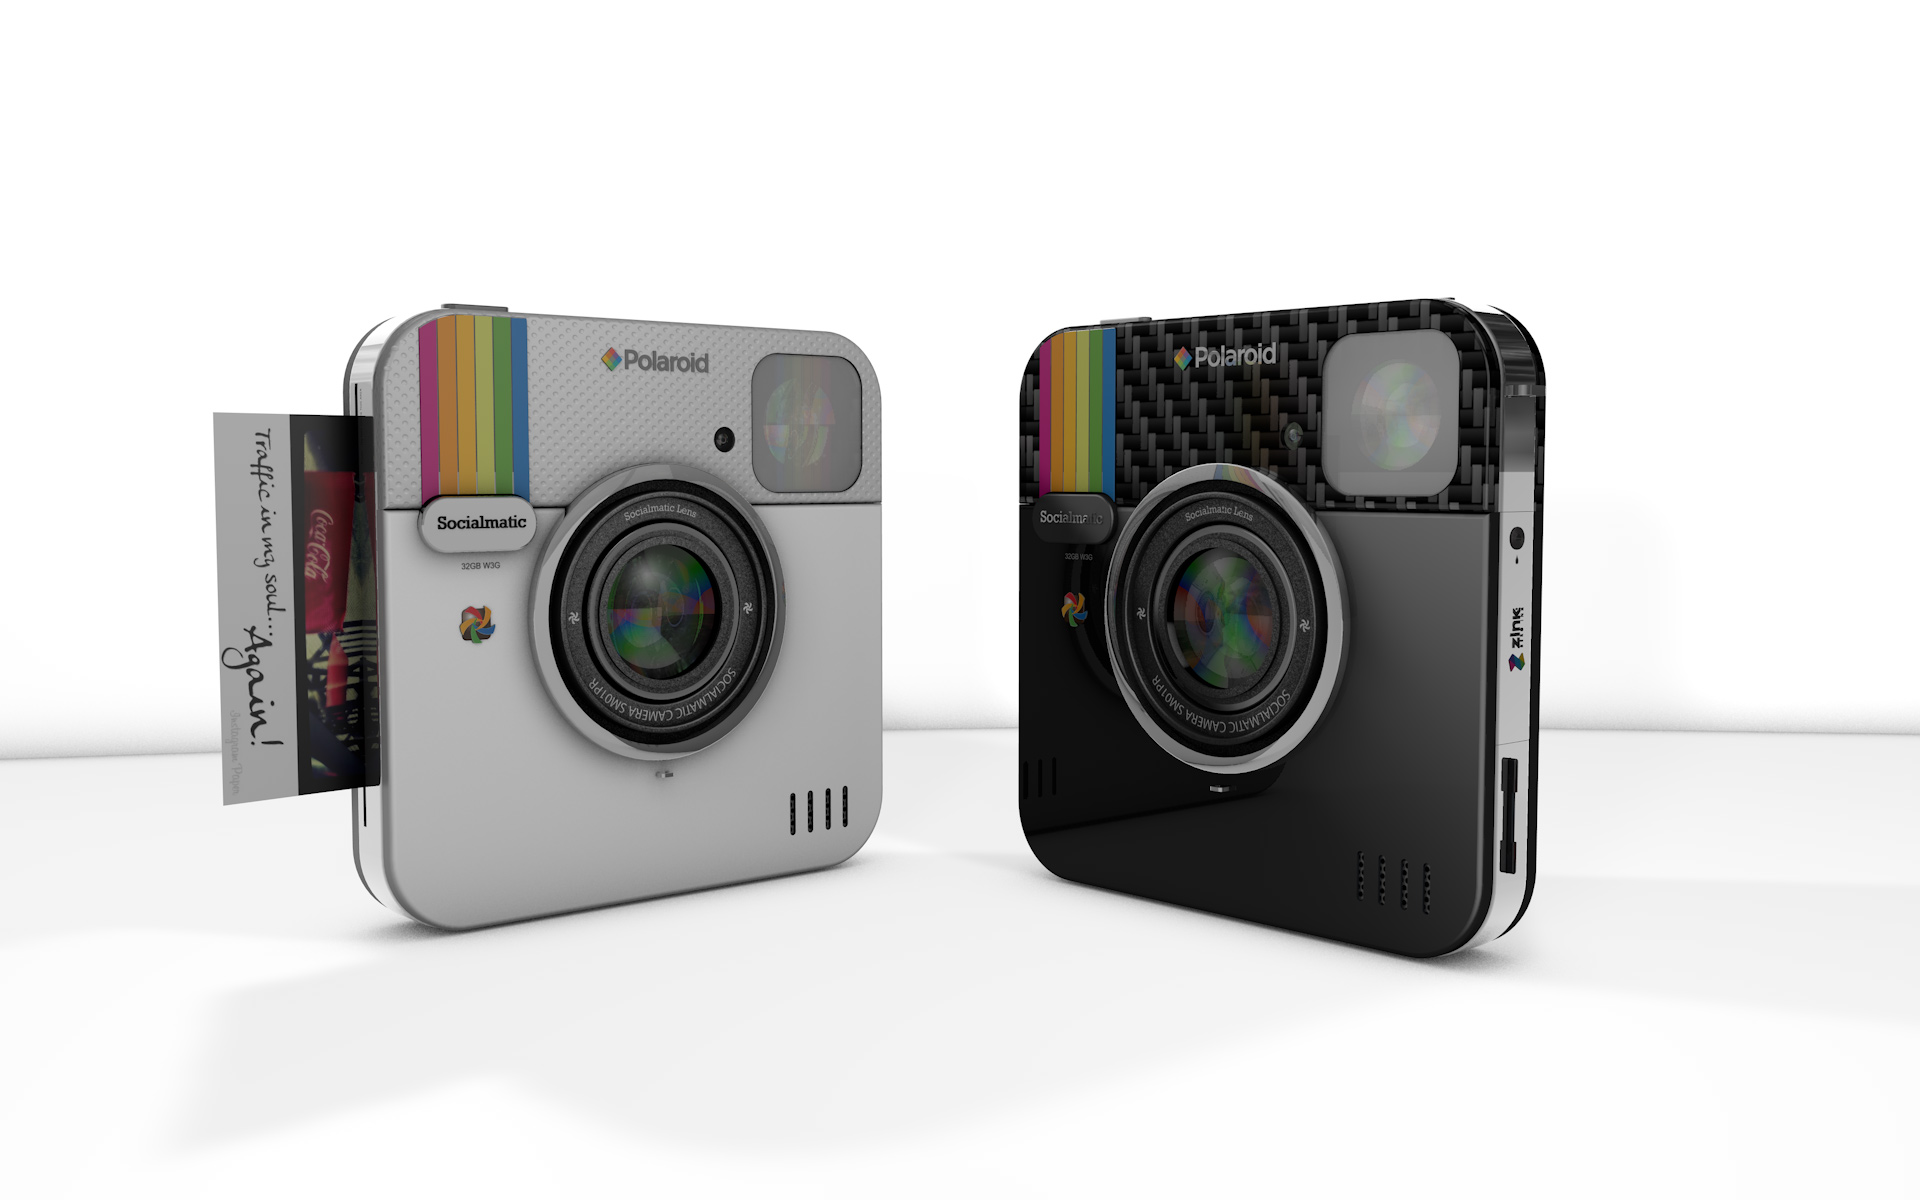 Polaroid Socialmatic camera - Print, Post and Share Photos Instantly